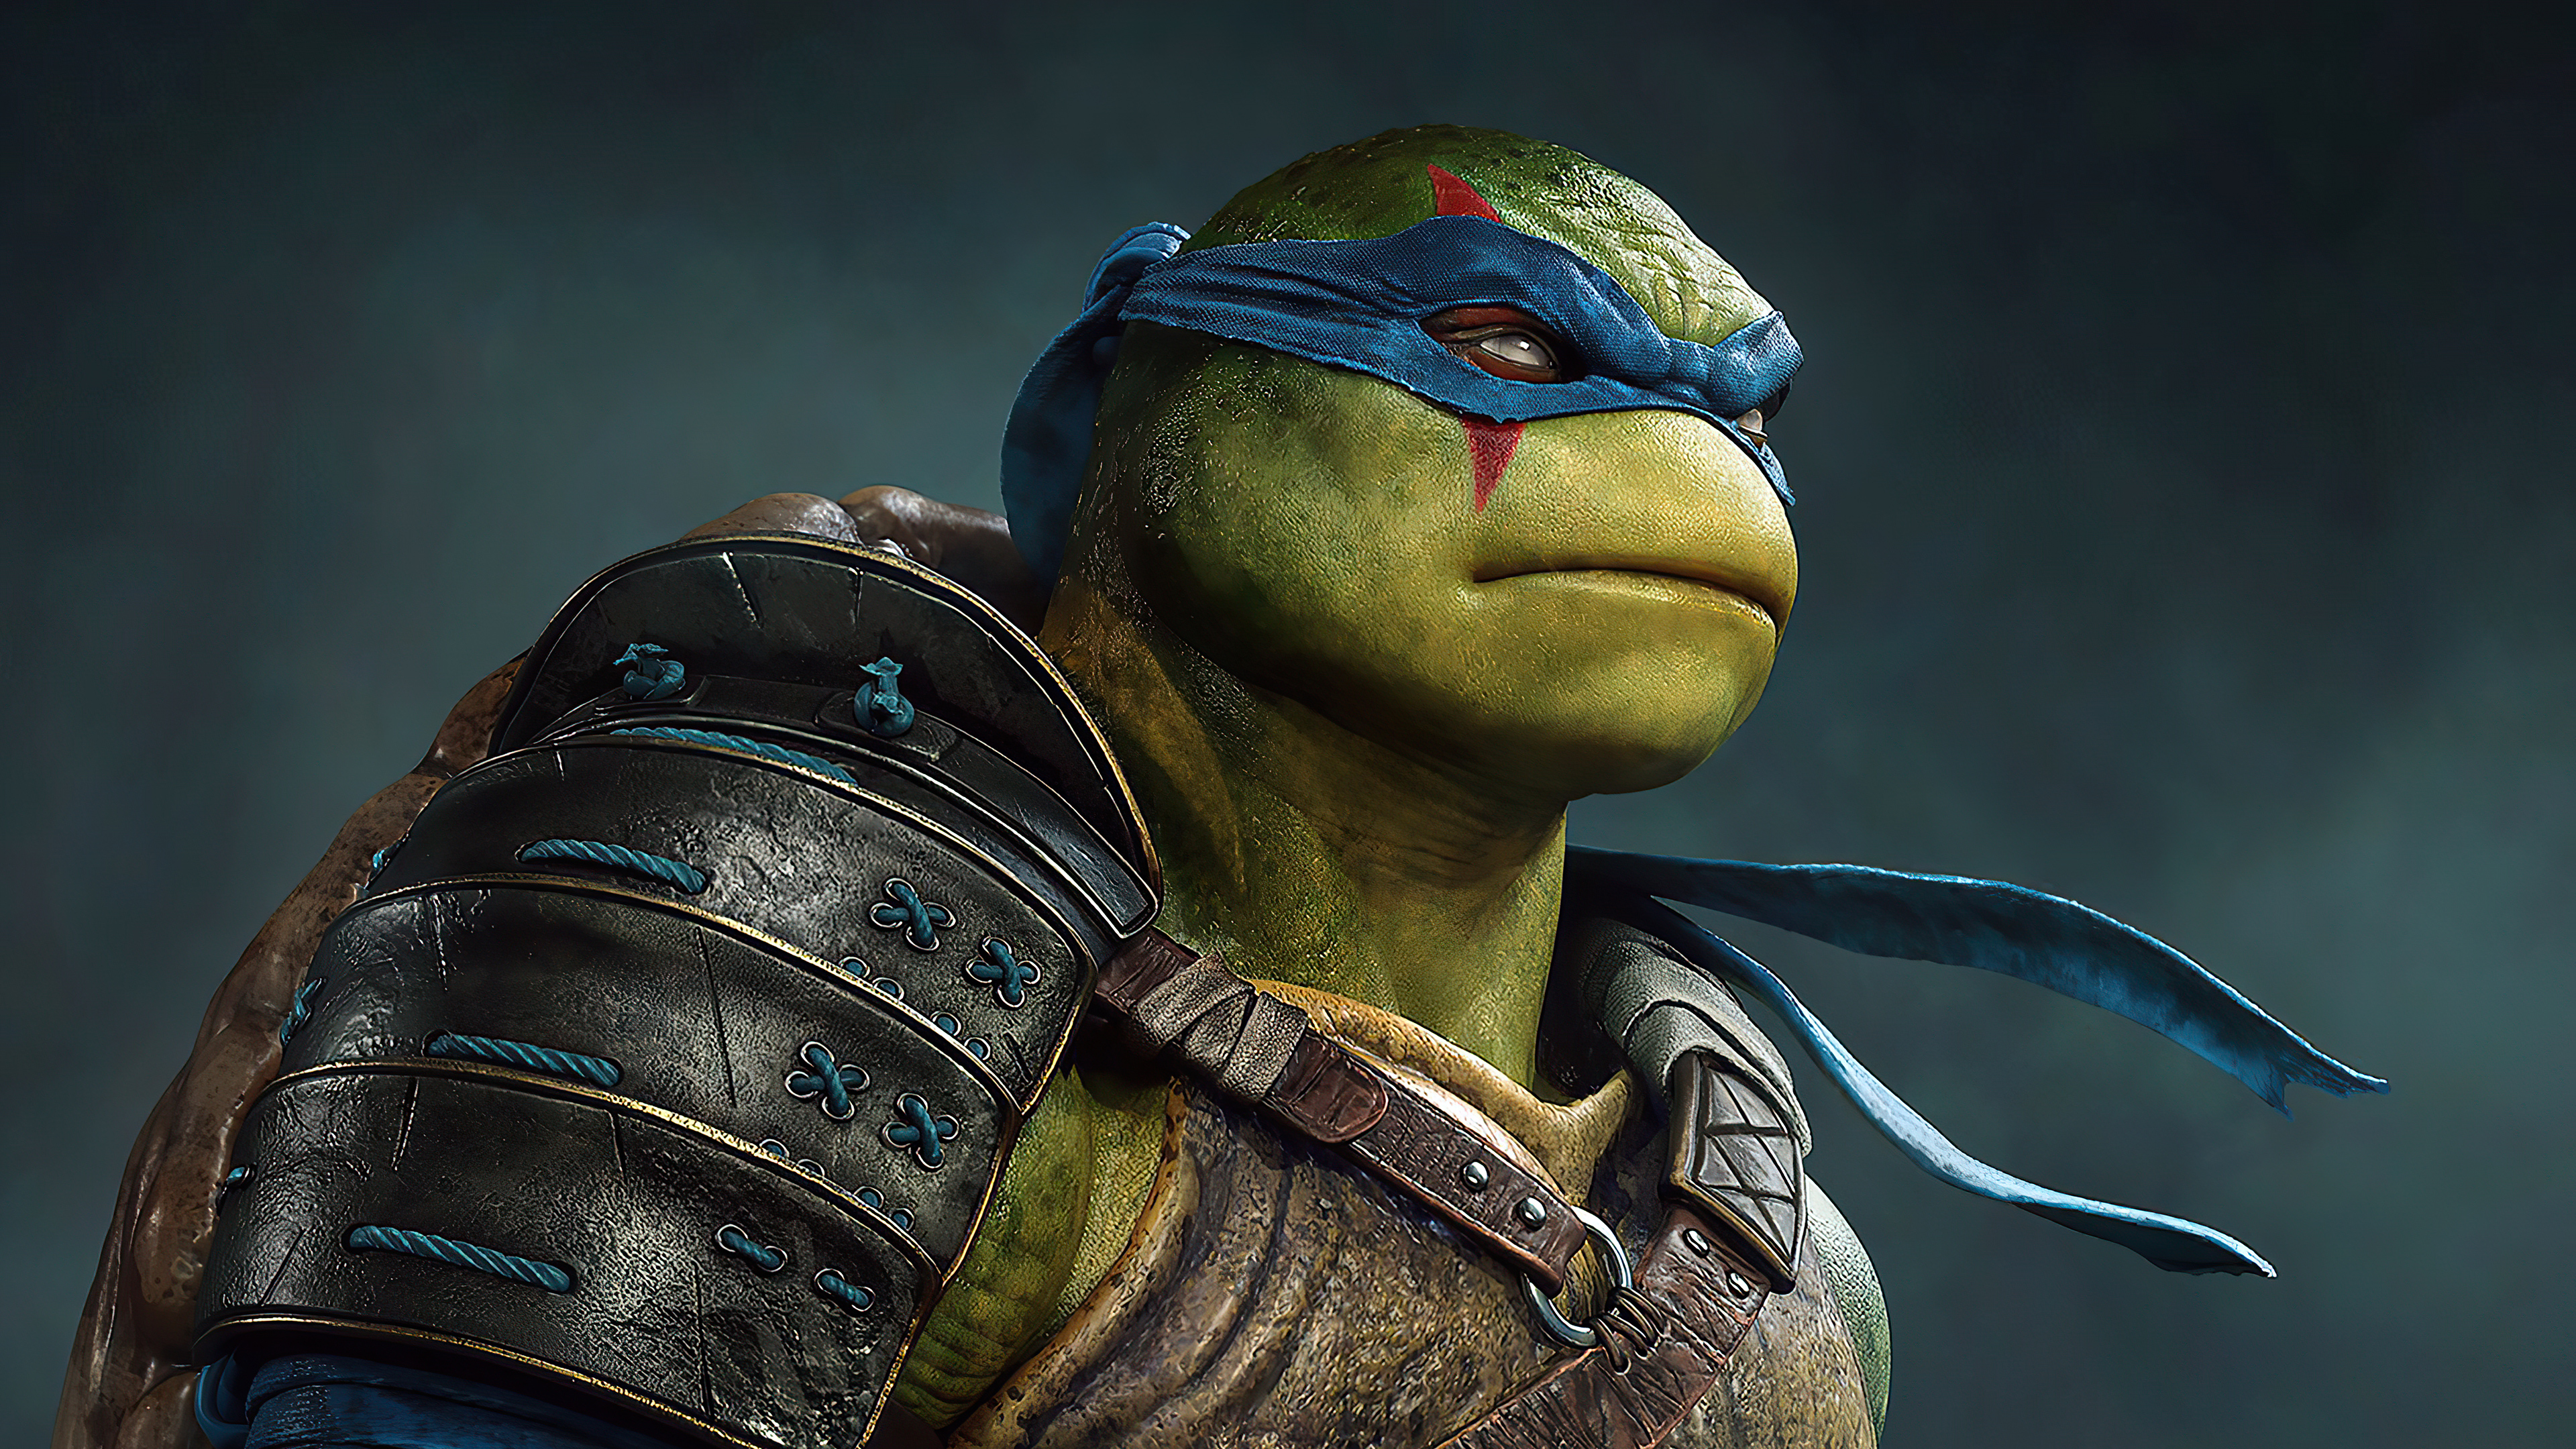 Leonardo Ninja Turtle 4k, HD Superheroes, 4k Wallpapers, Images